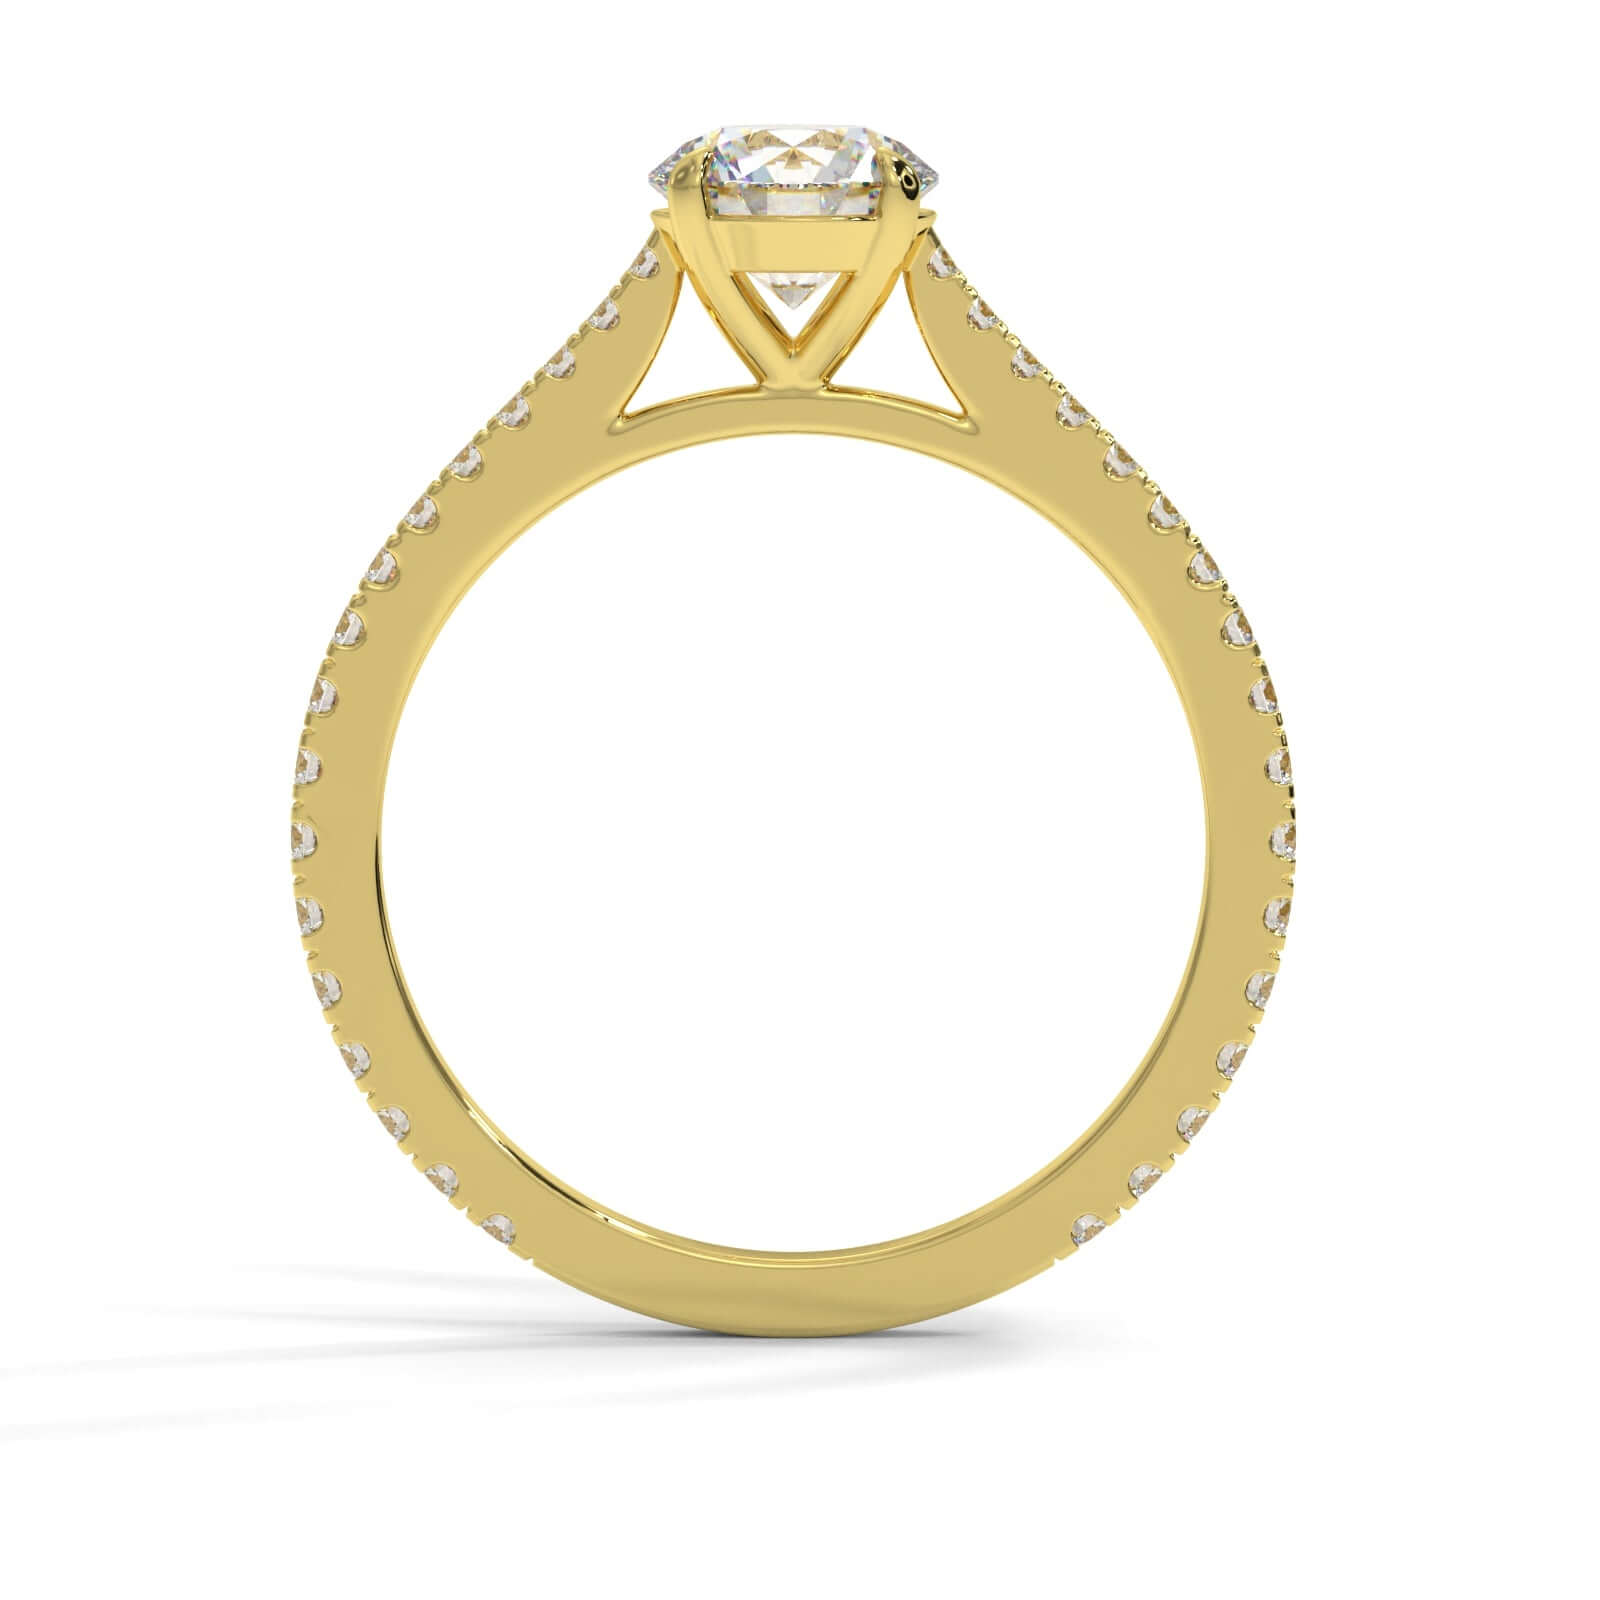 Round brilliant Diamond Engagement Ring Gold